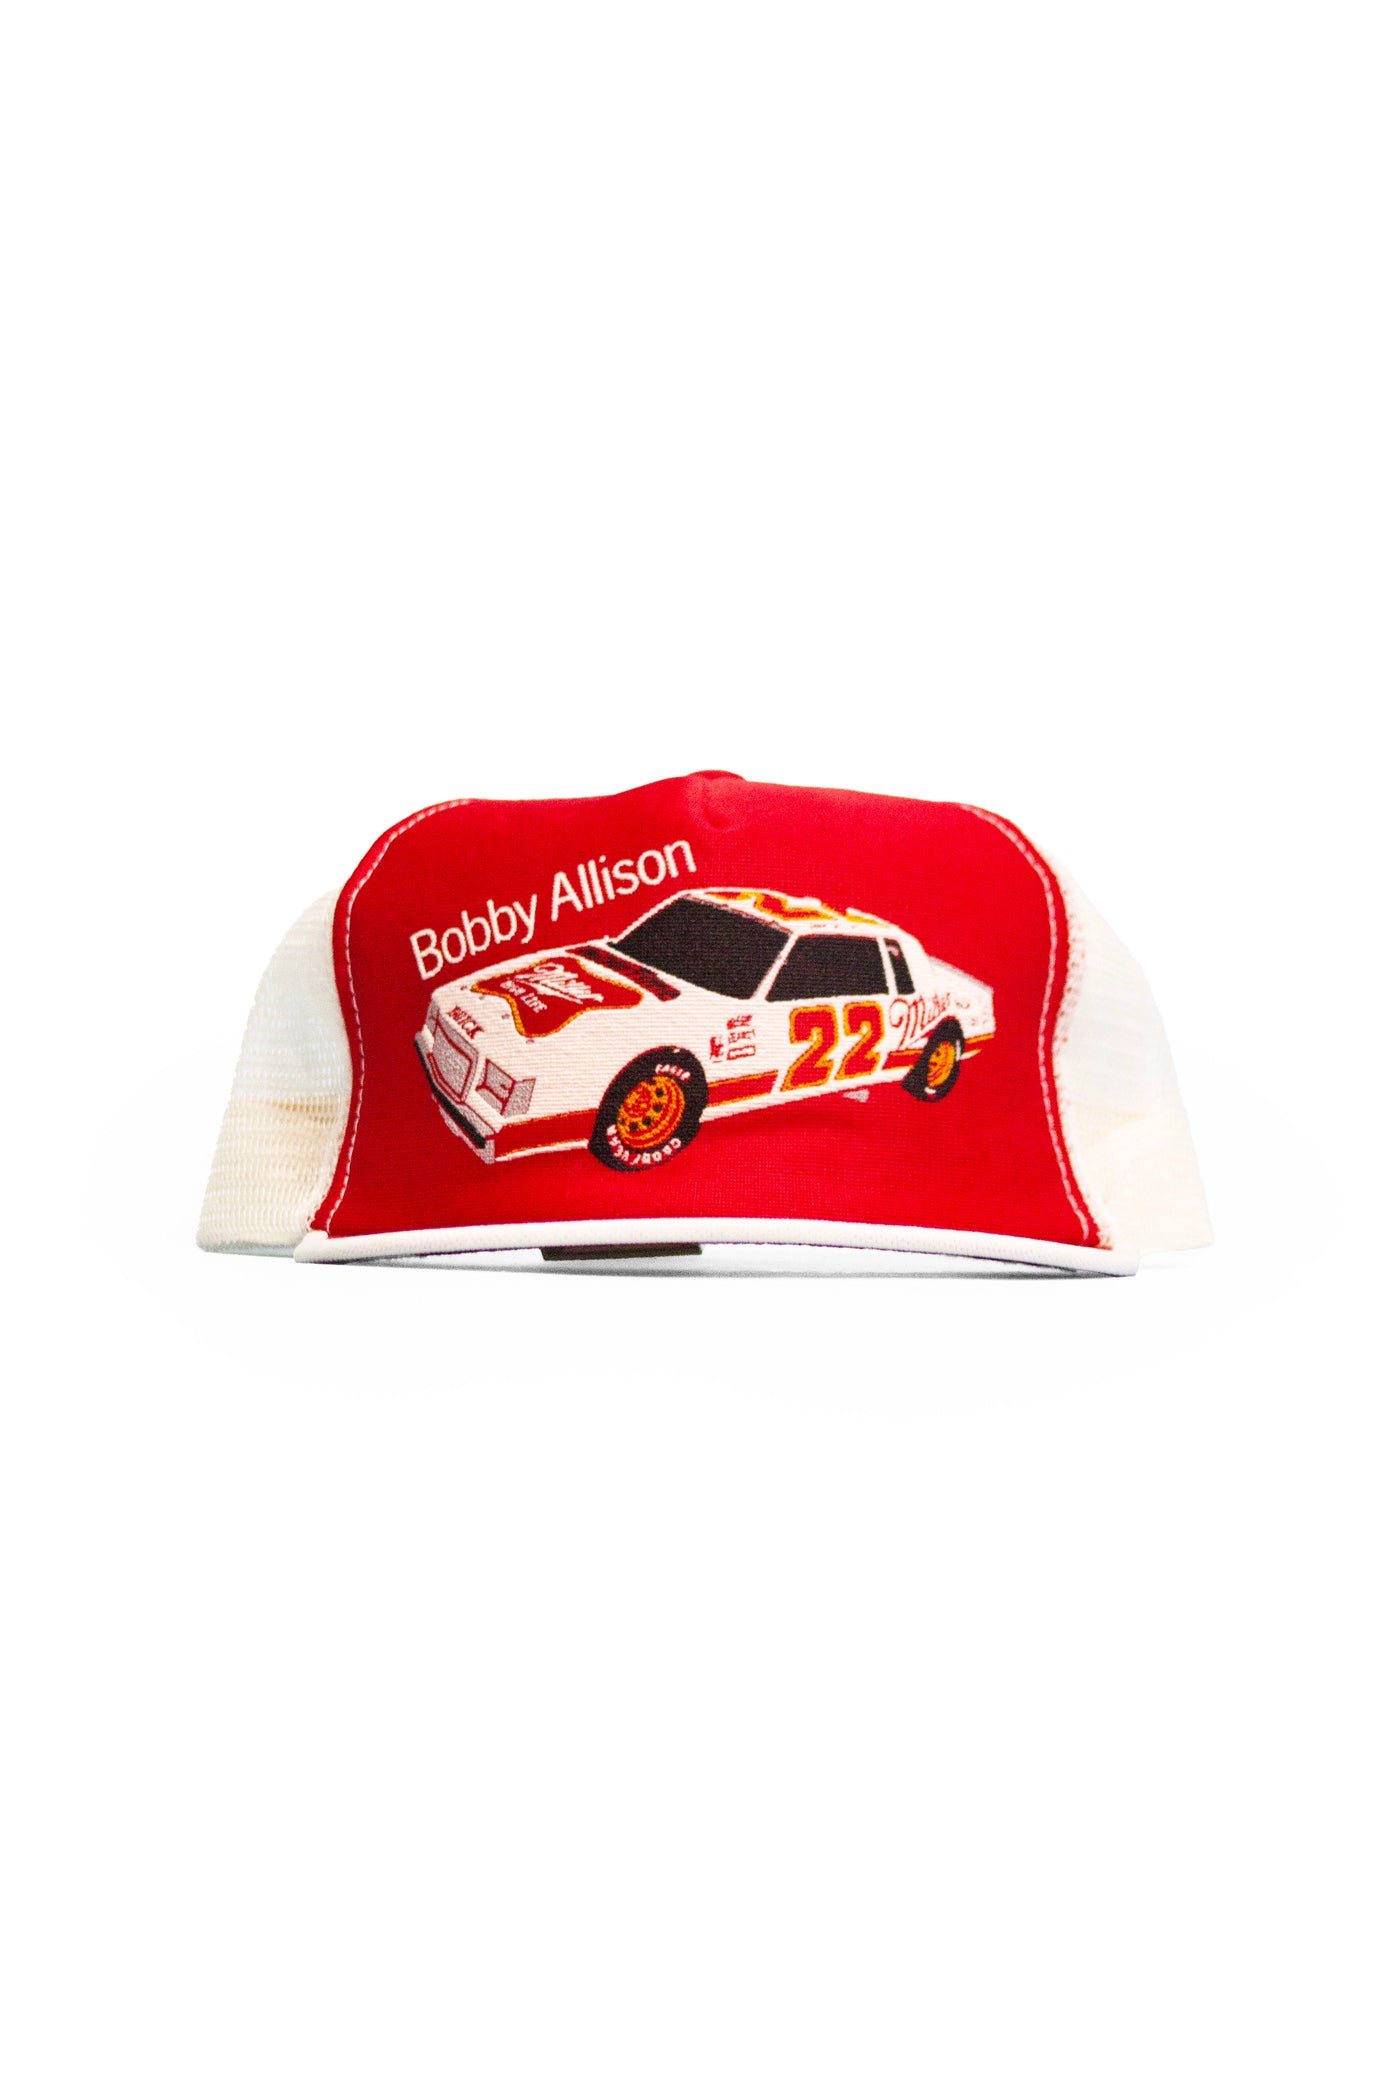 Vintage Bobby Allison Racing Trucker Hat